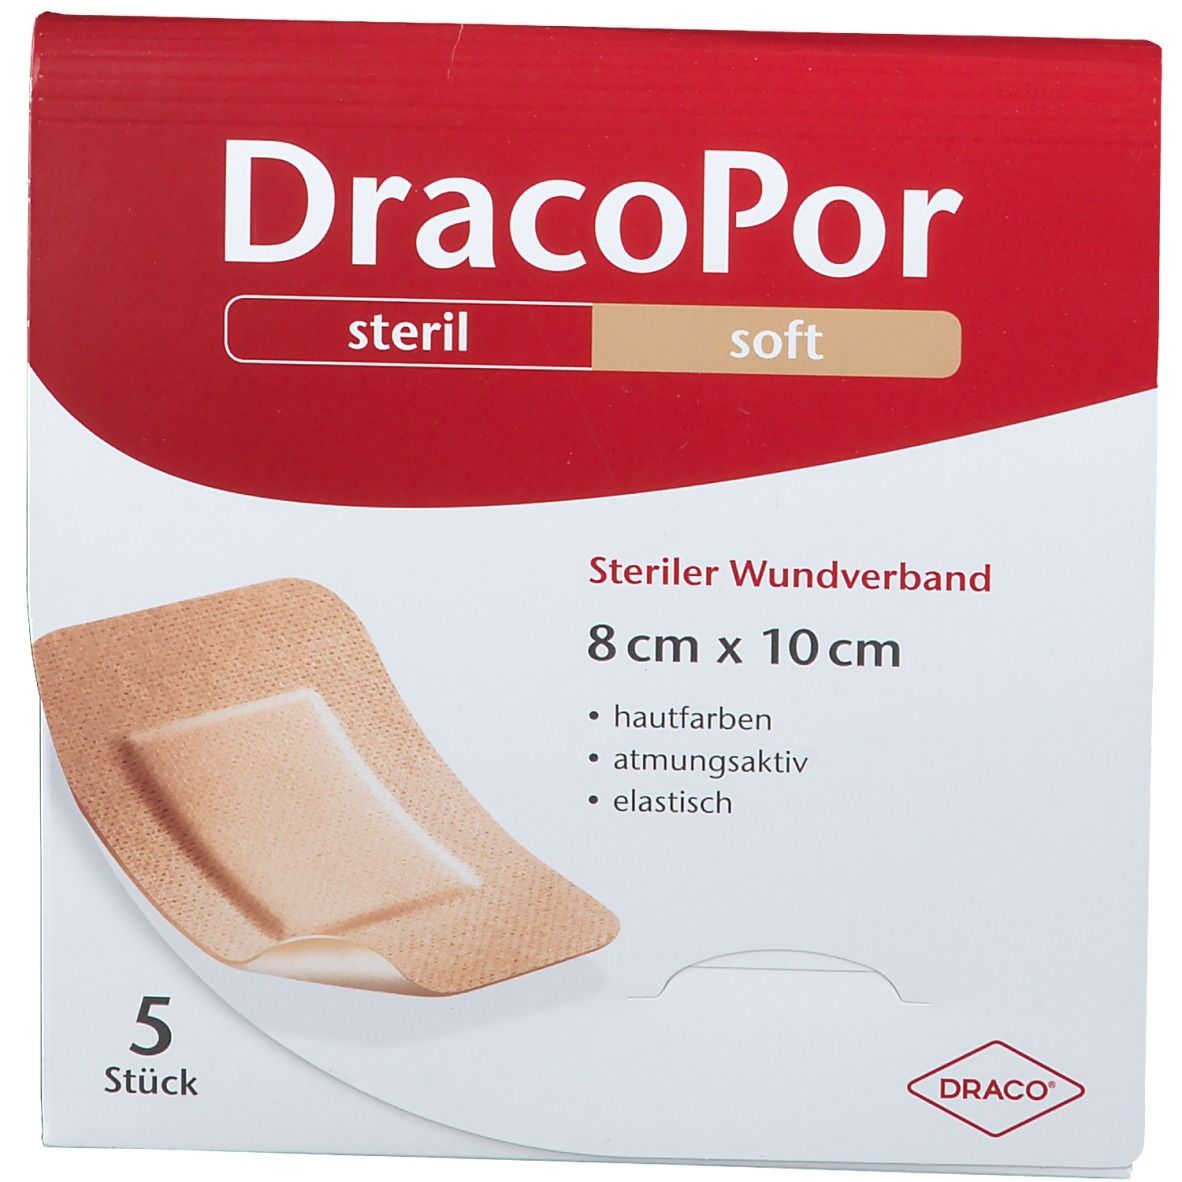 DracoPor Soft hautfarben 8 x 10 cm steril